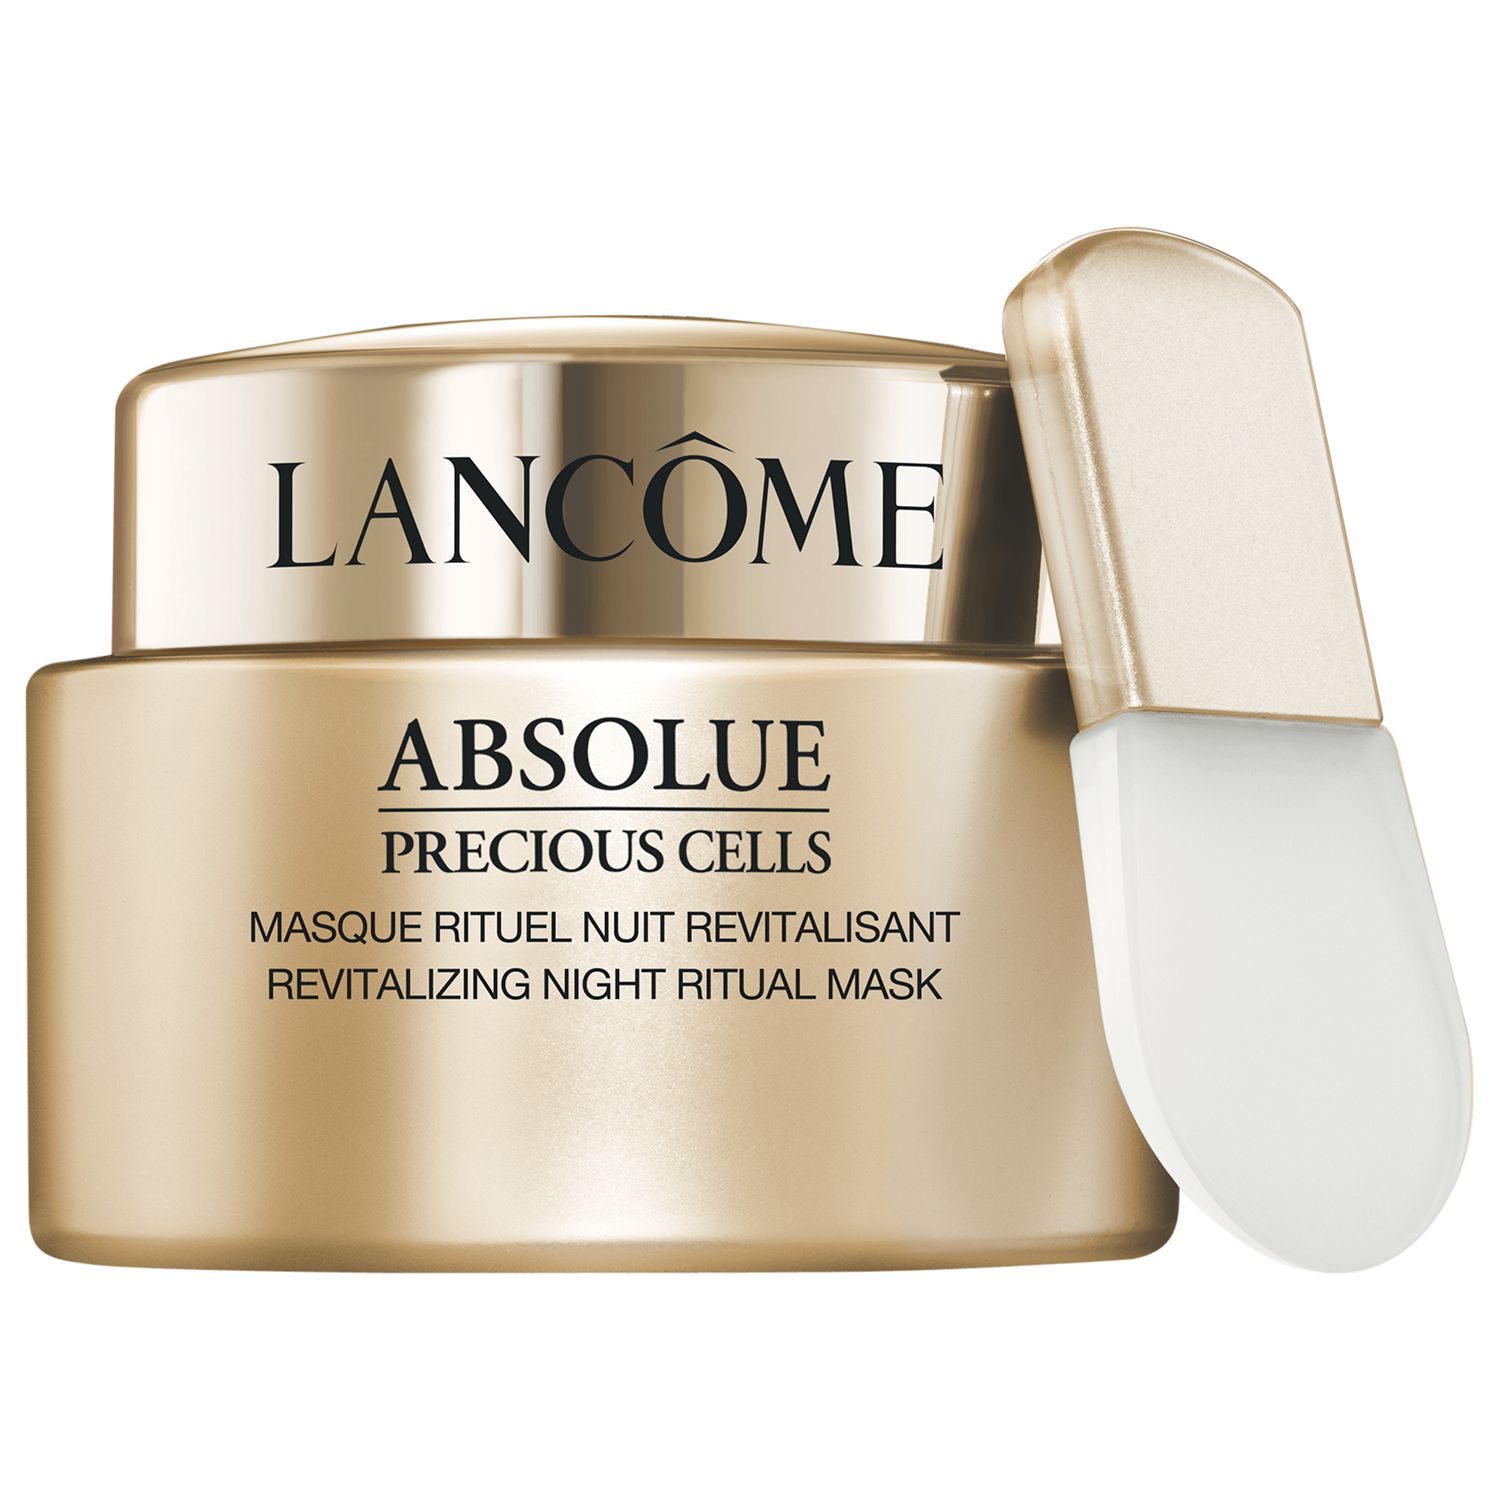 Lancôme Absolue Precious Cells Revitalising Night Ritual Mask, 75ml